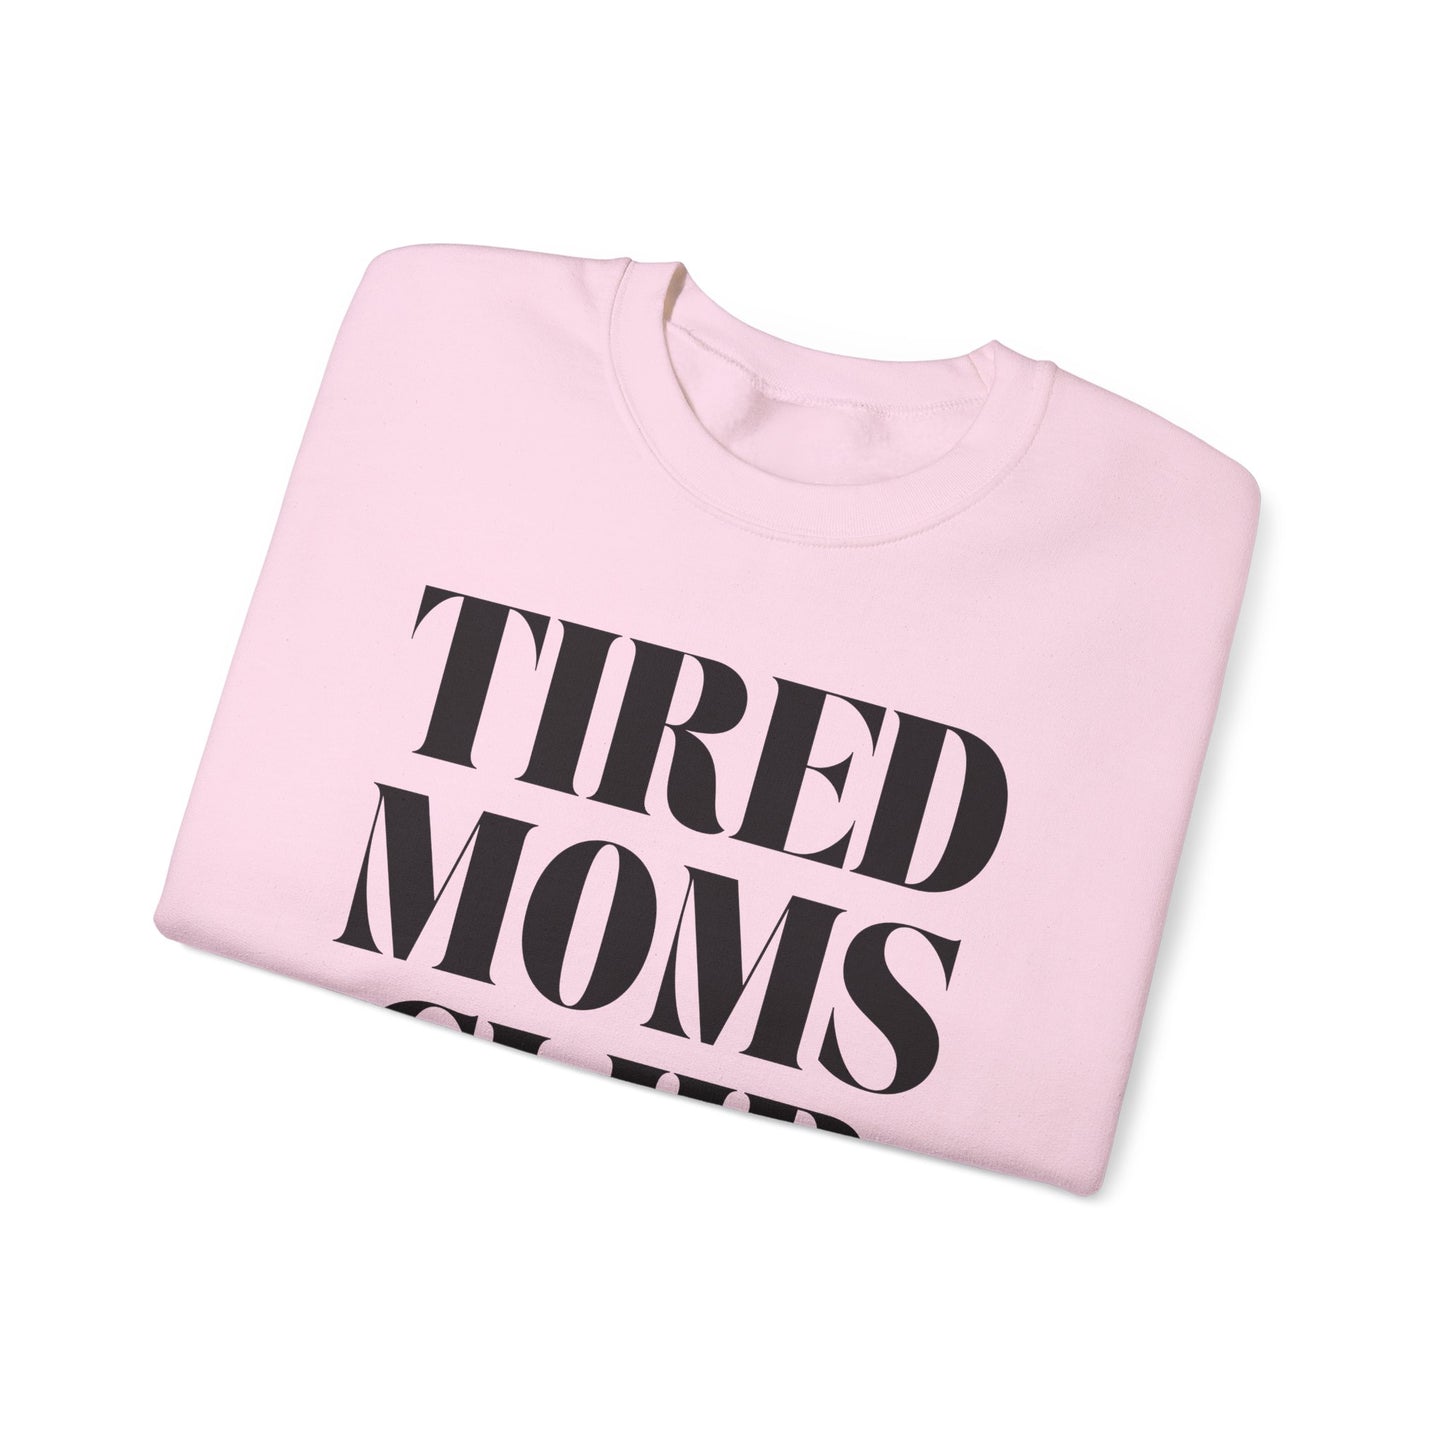 Tired Moms Club Mama Sweatshirt